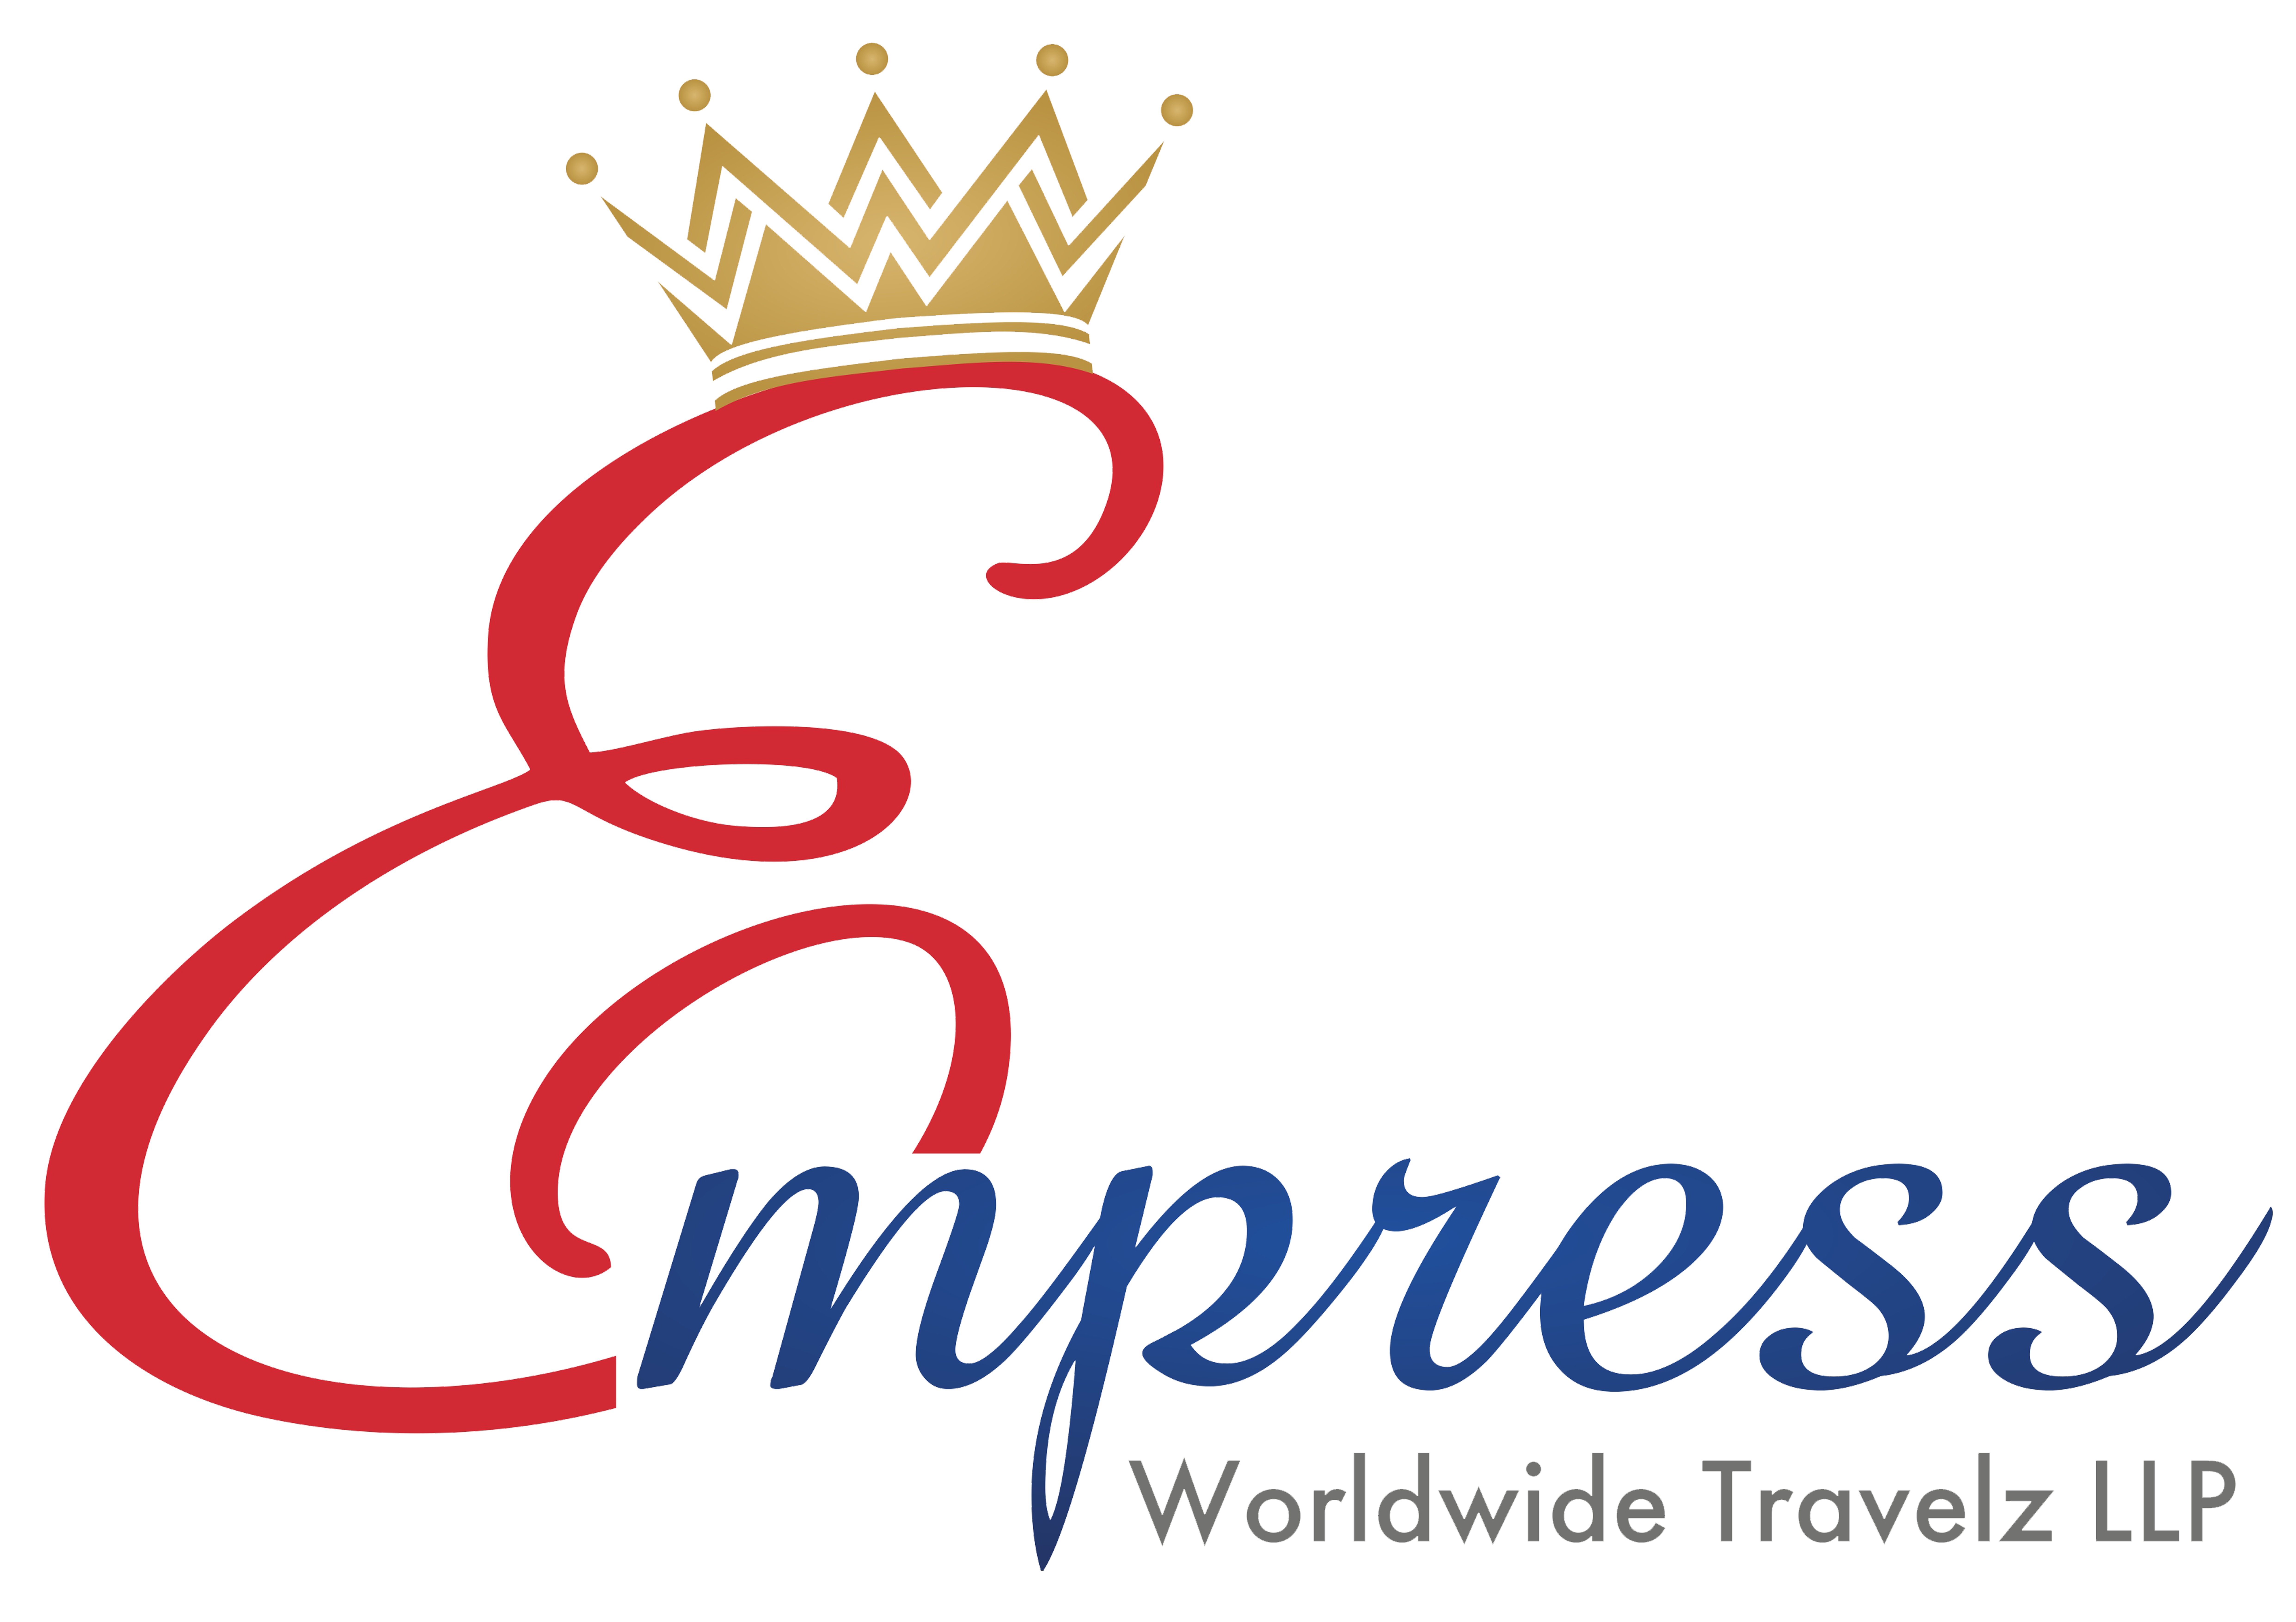 Empress Worldwide